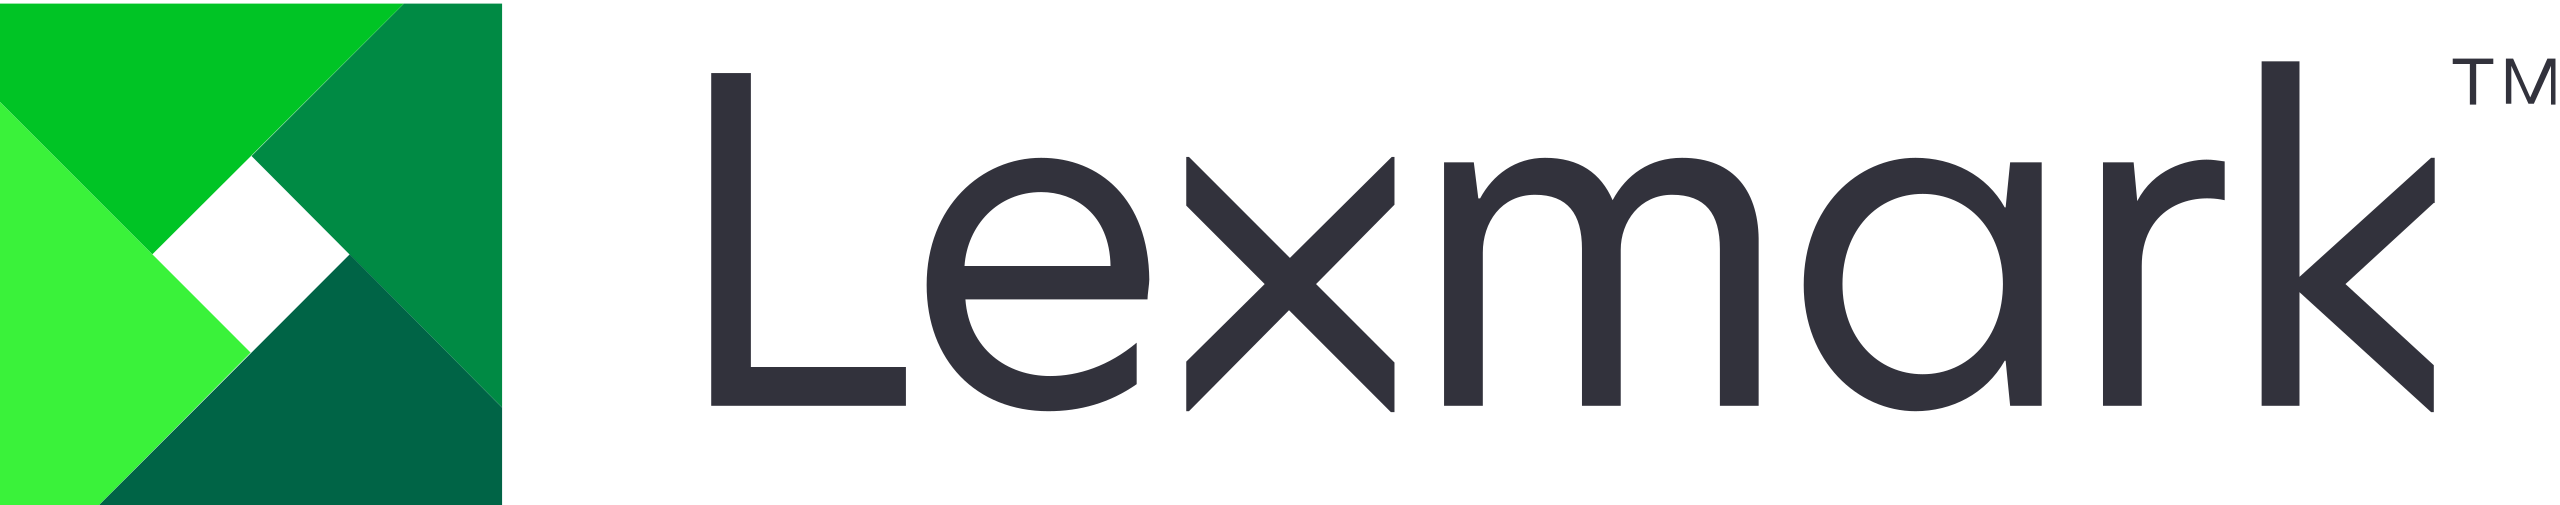 Lexmark-primary-logo.svg copy